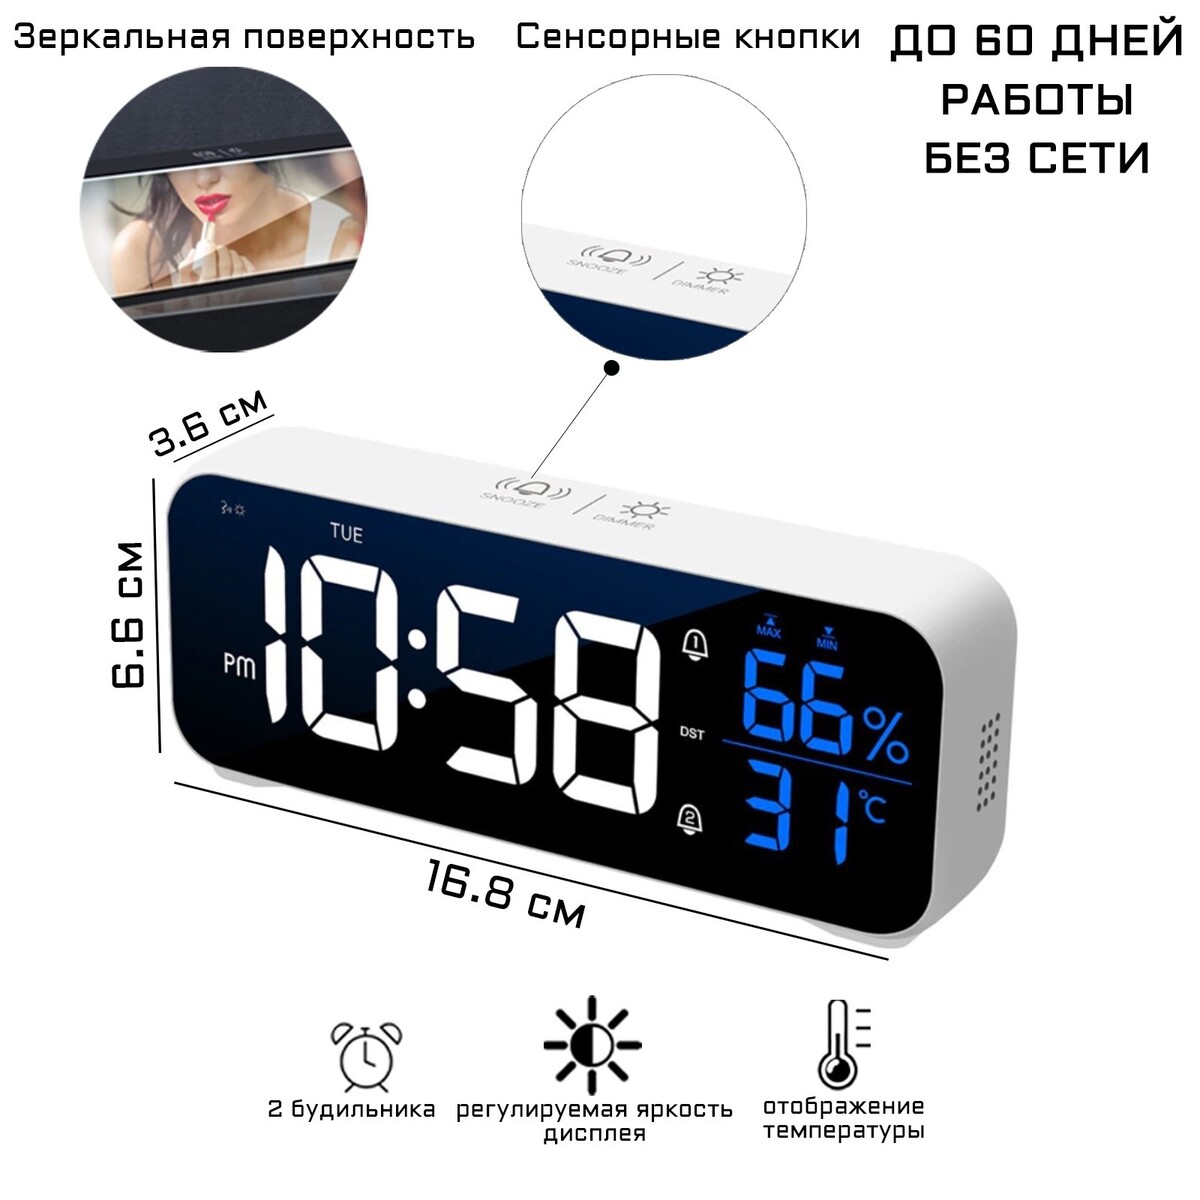 Часы - будильник электронные настольные: календарь, термометр, гигрометр, 16.8 х 6.6 см часы электронные настольные c термометром гигрометром 7 х 14 5 х 4 см